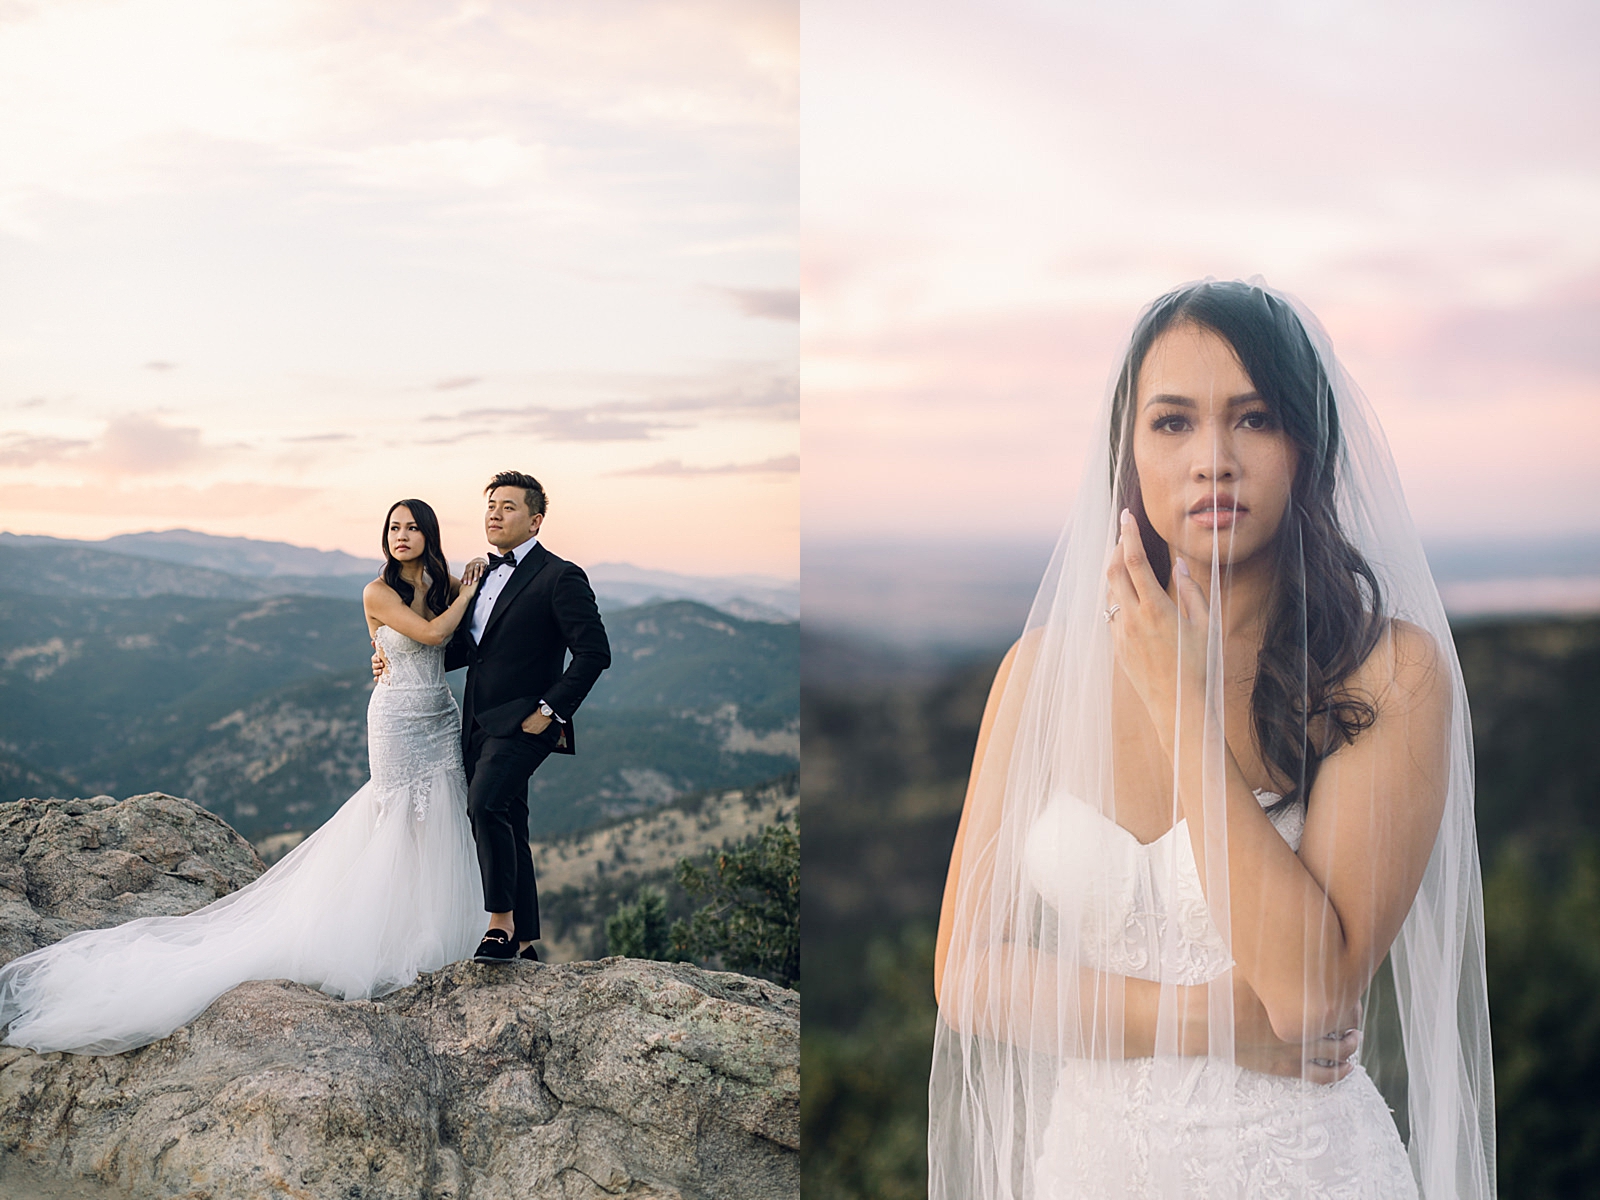 Colorado weddings; sunset portraits